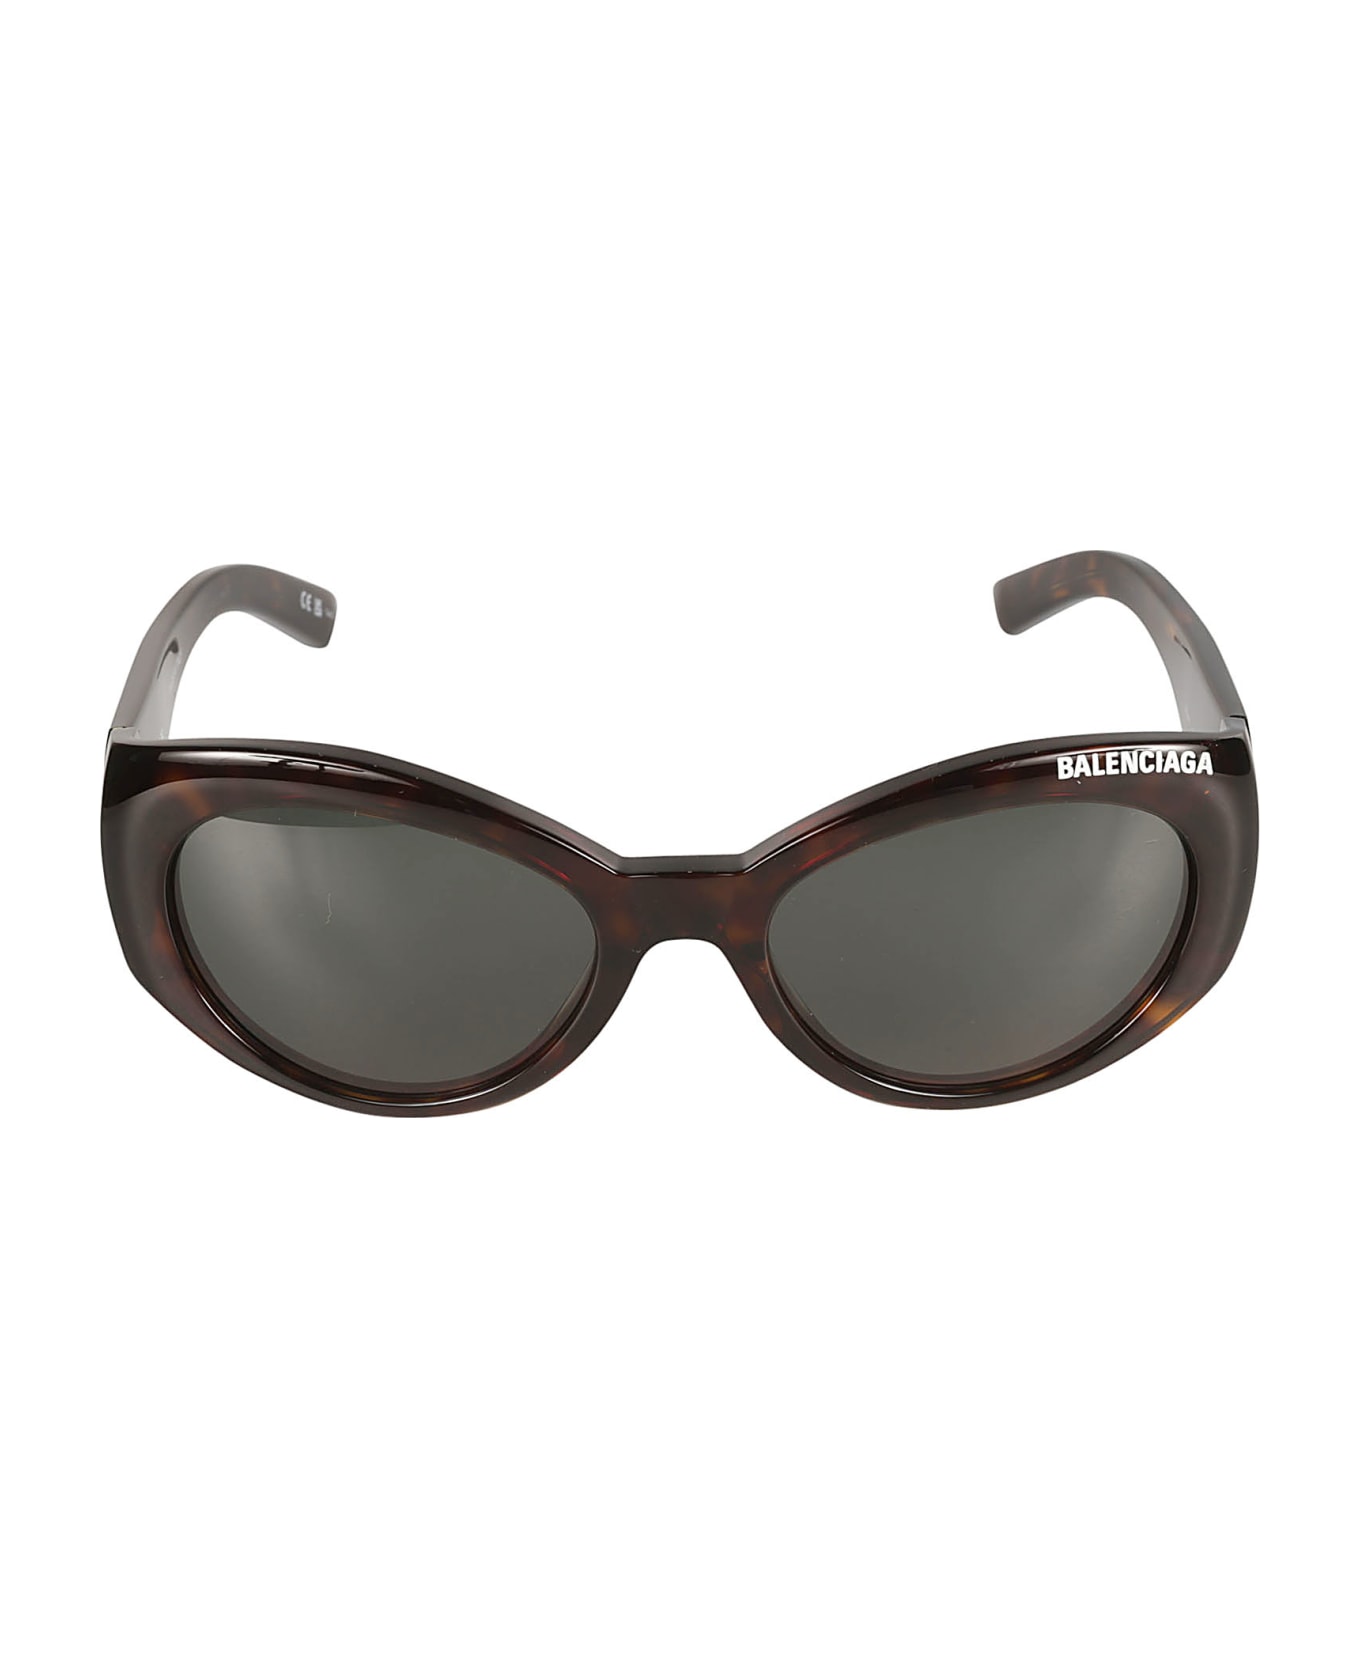 Balenciaga Eyewear Flame Effect Round Frame Sunglasses - Havana/Green サングラス